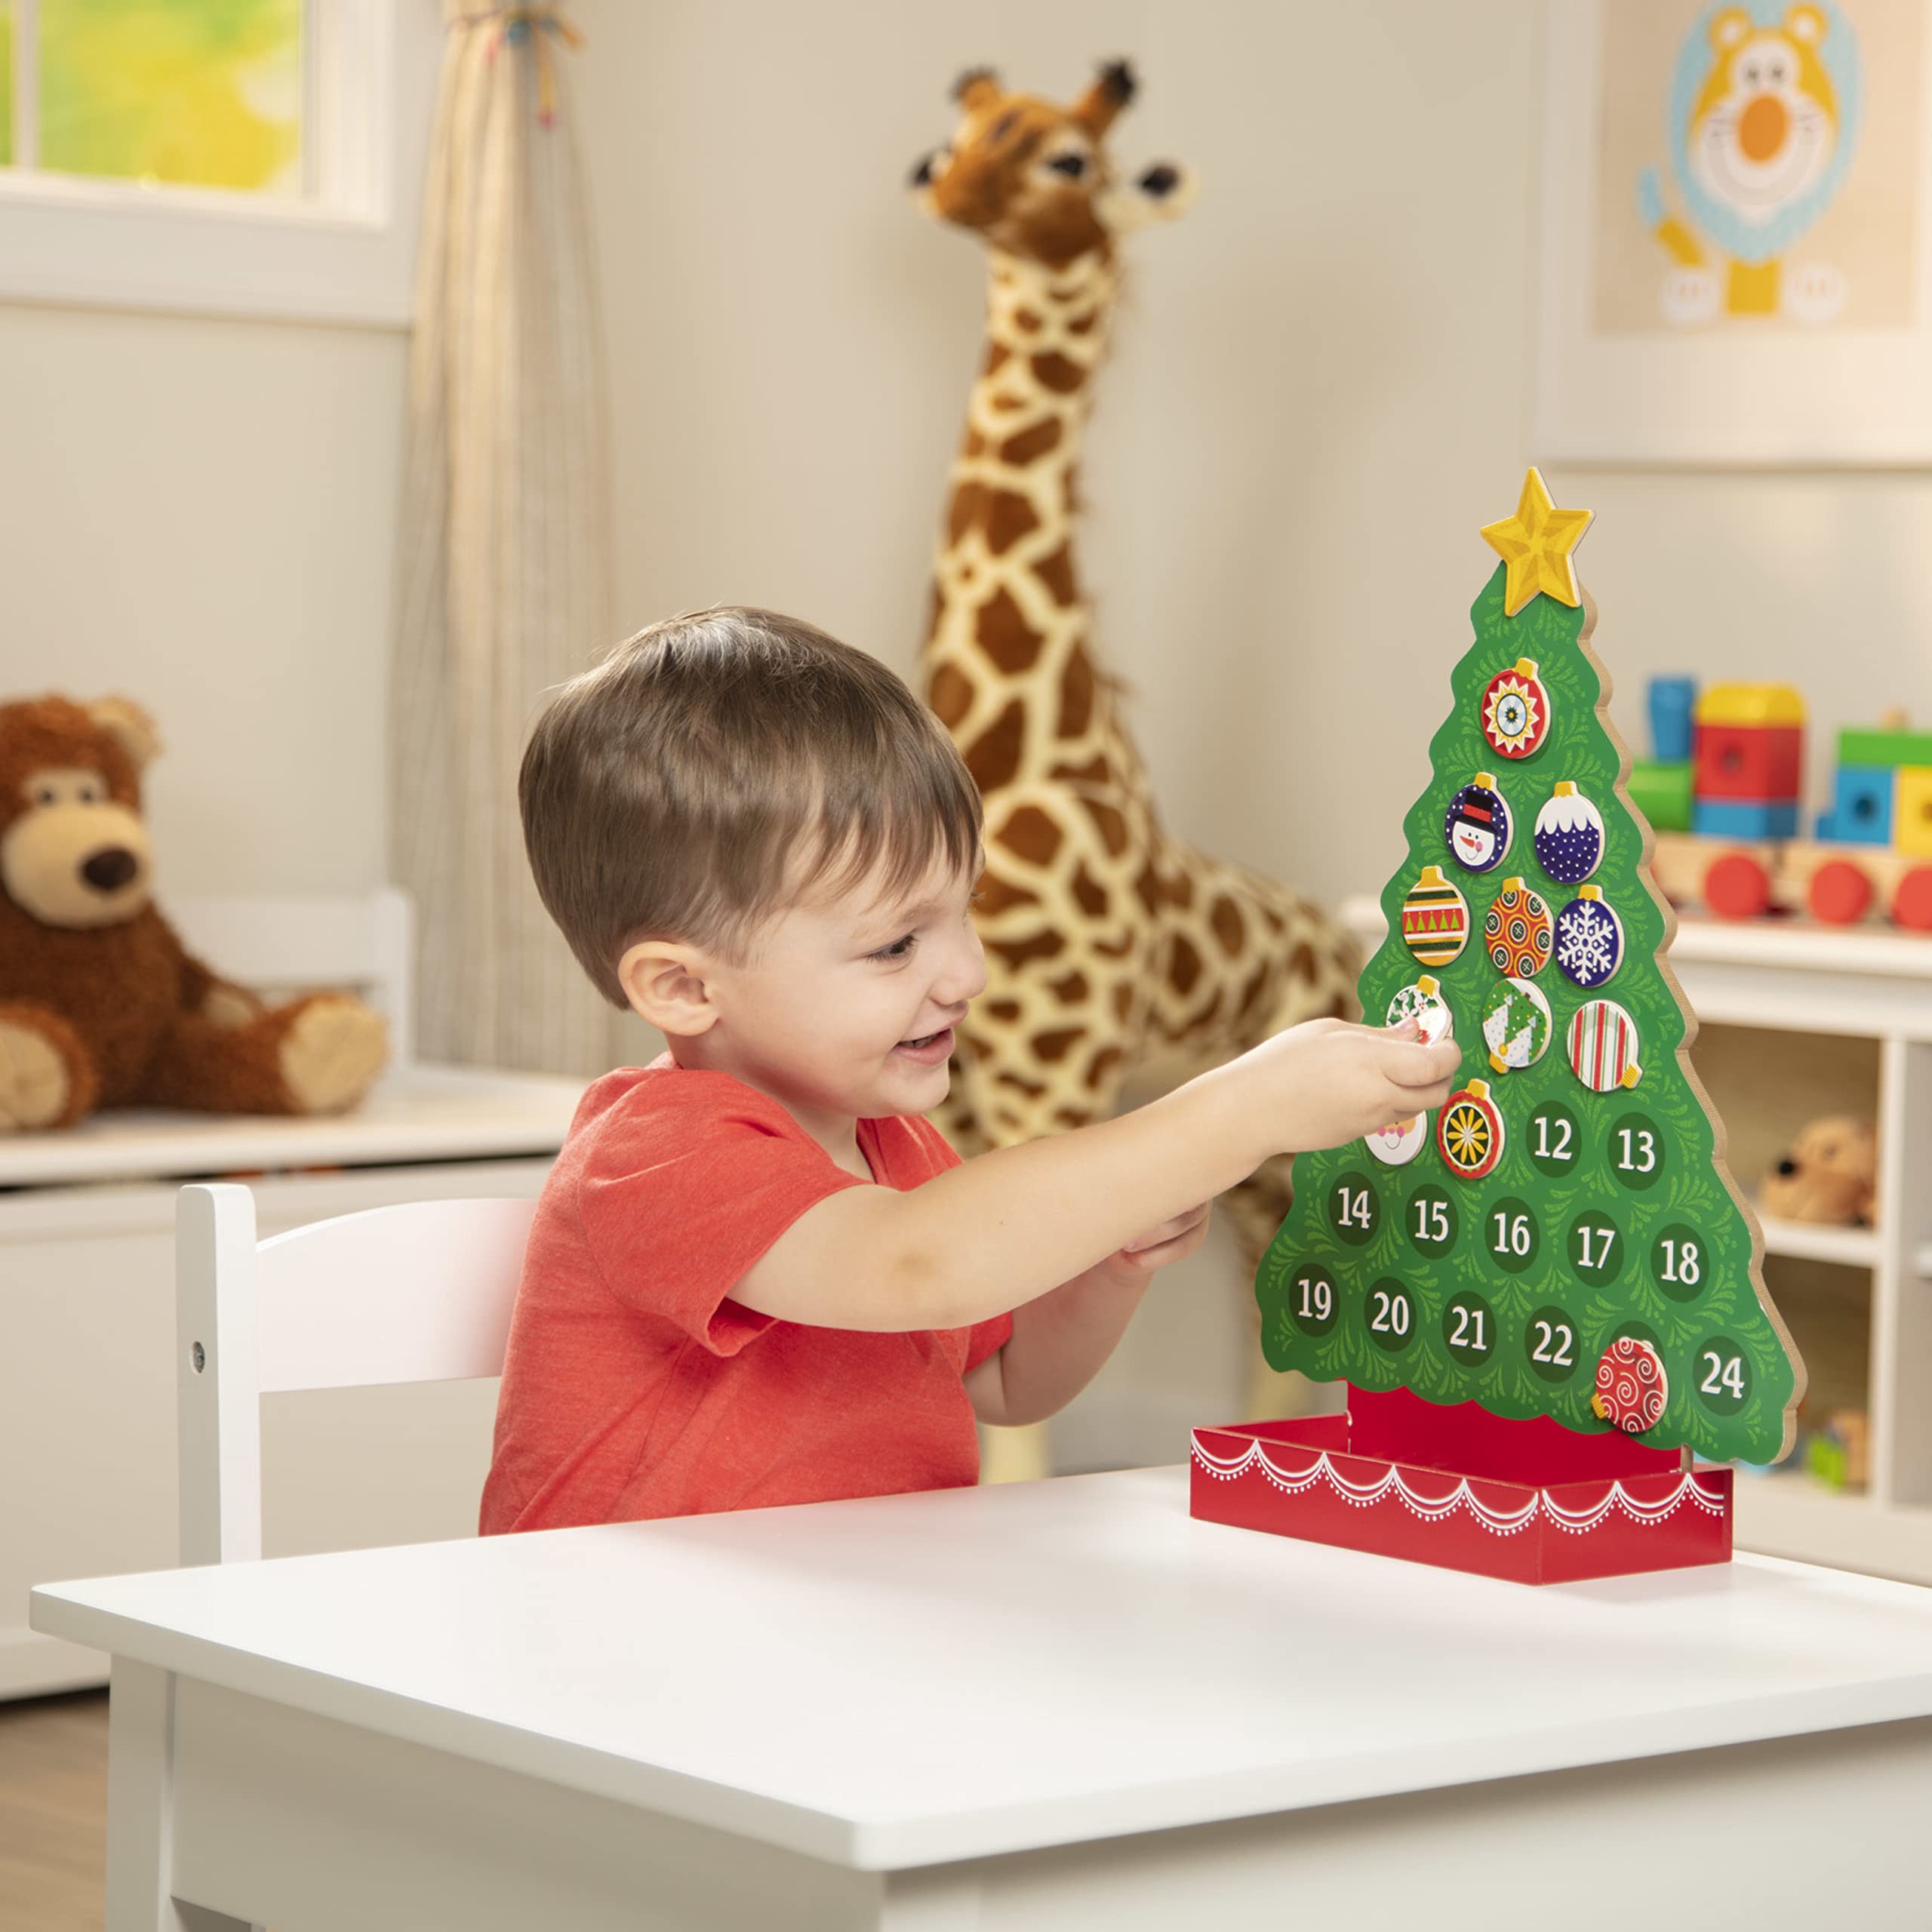 Melissa & Doug Countdown to Christmas Wooden Advent Calendar - Magnetic Tree, 25 Magnets , Orange